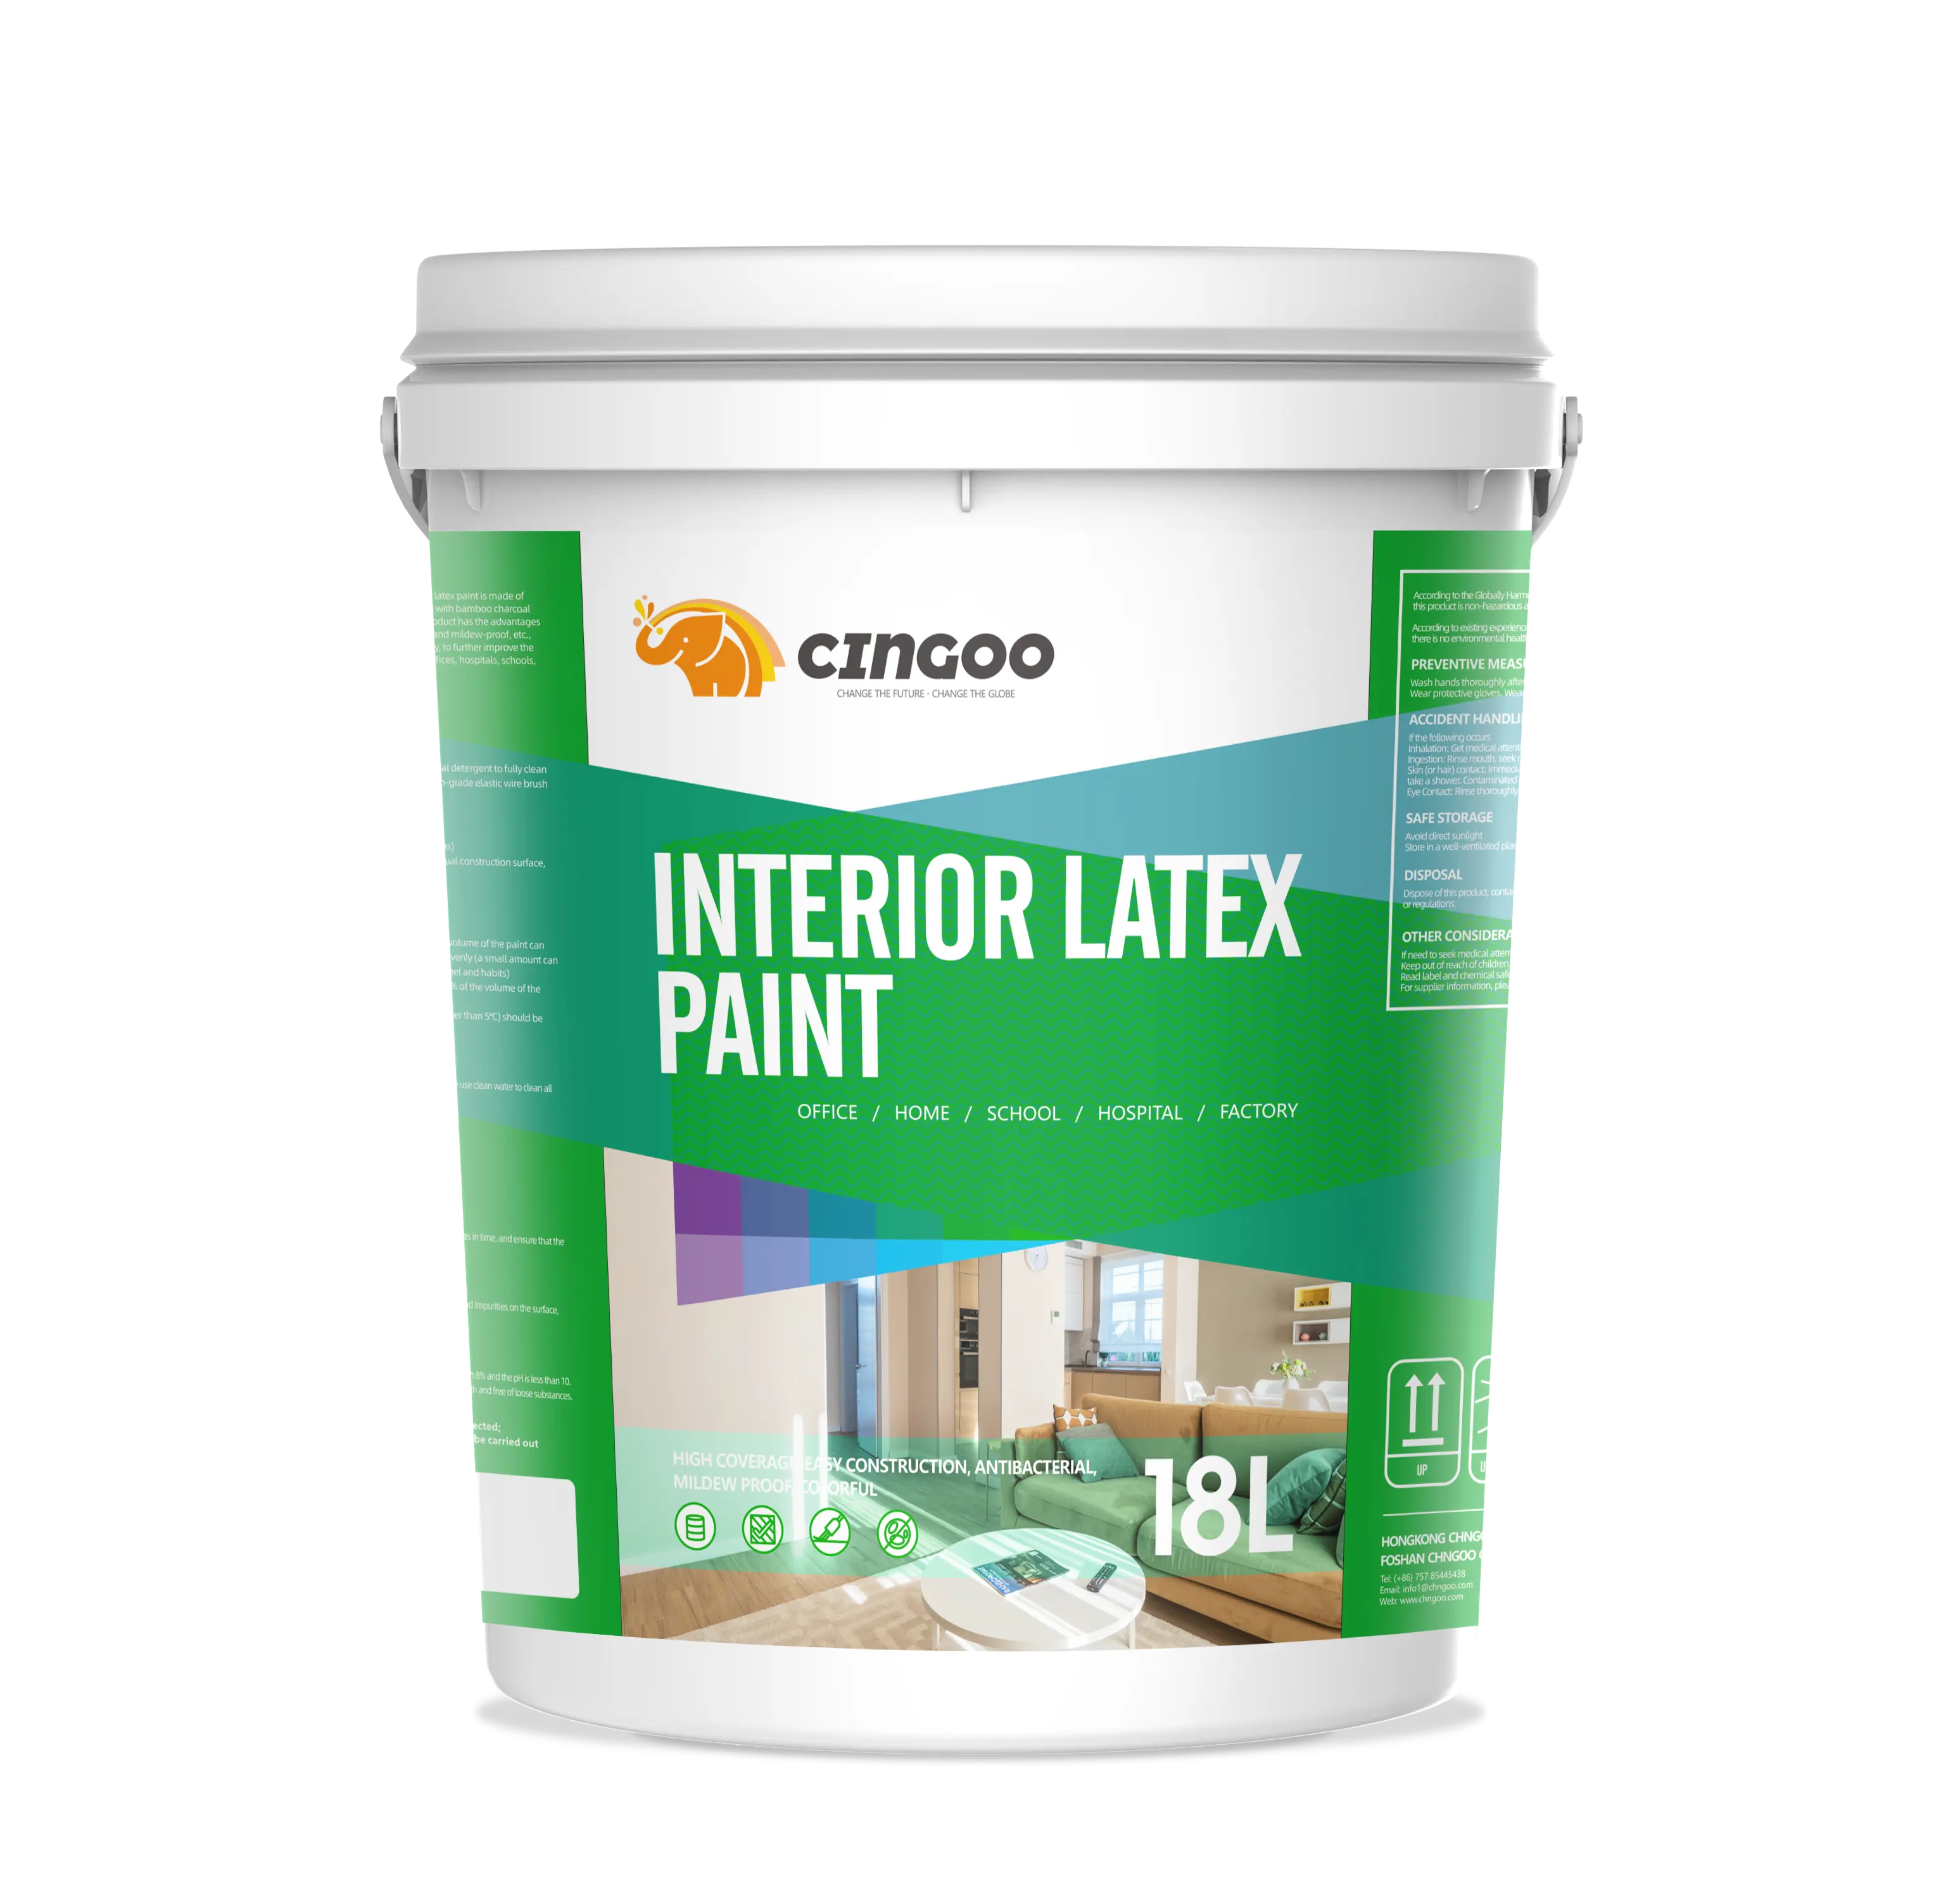 CINGOO Latex Wall Emulsion Paint Texture House Interior Colors Wall Paint Coating